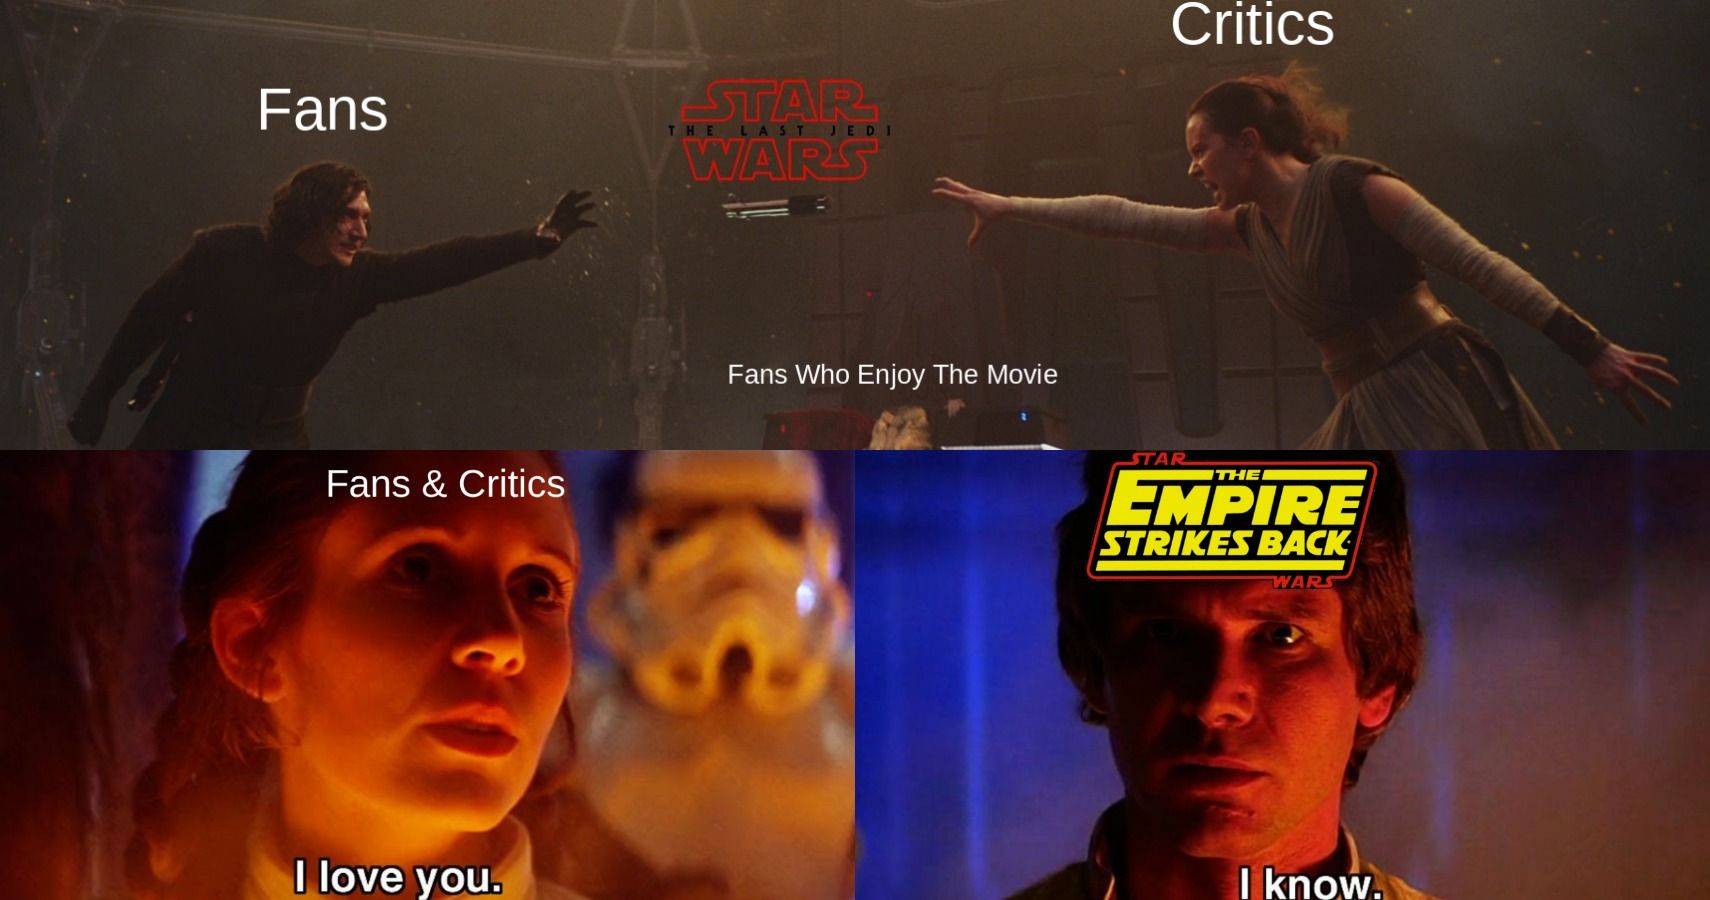 Star Wars: The Last Jedi' Rotten Tomatoes Scores Show Discrepancy